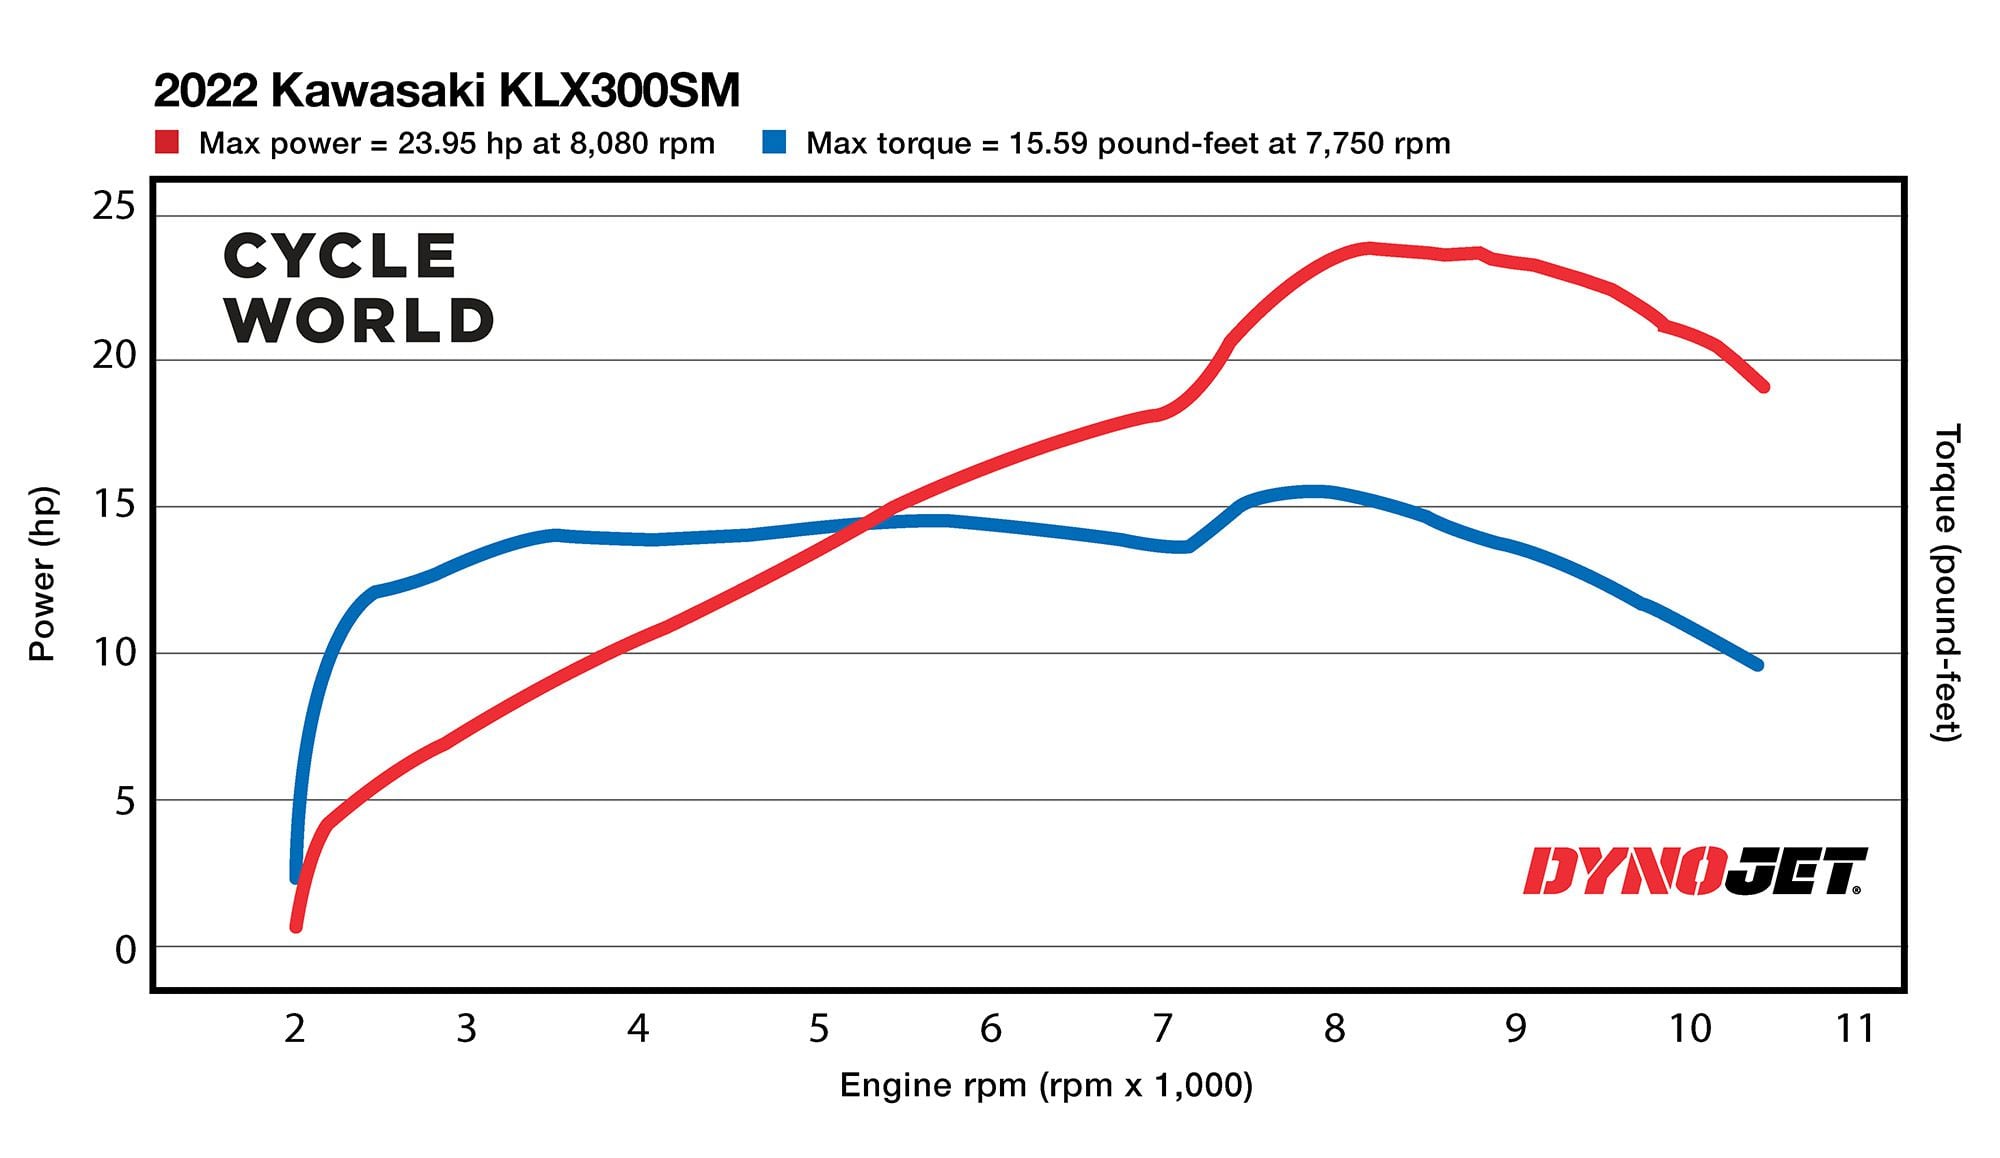 Horsepower and torque figures on the 2022 Kawasaki KLX300SM.